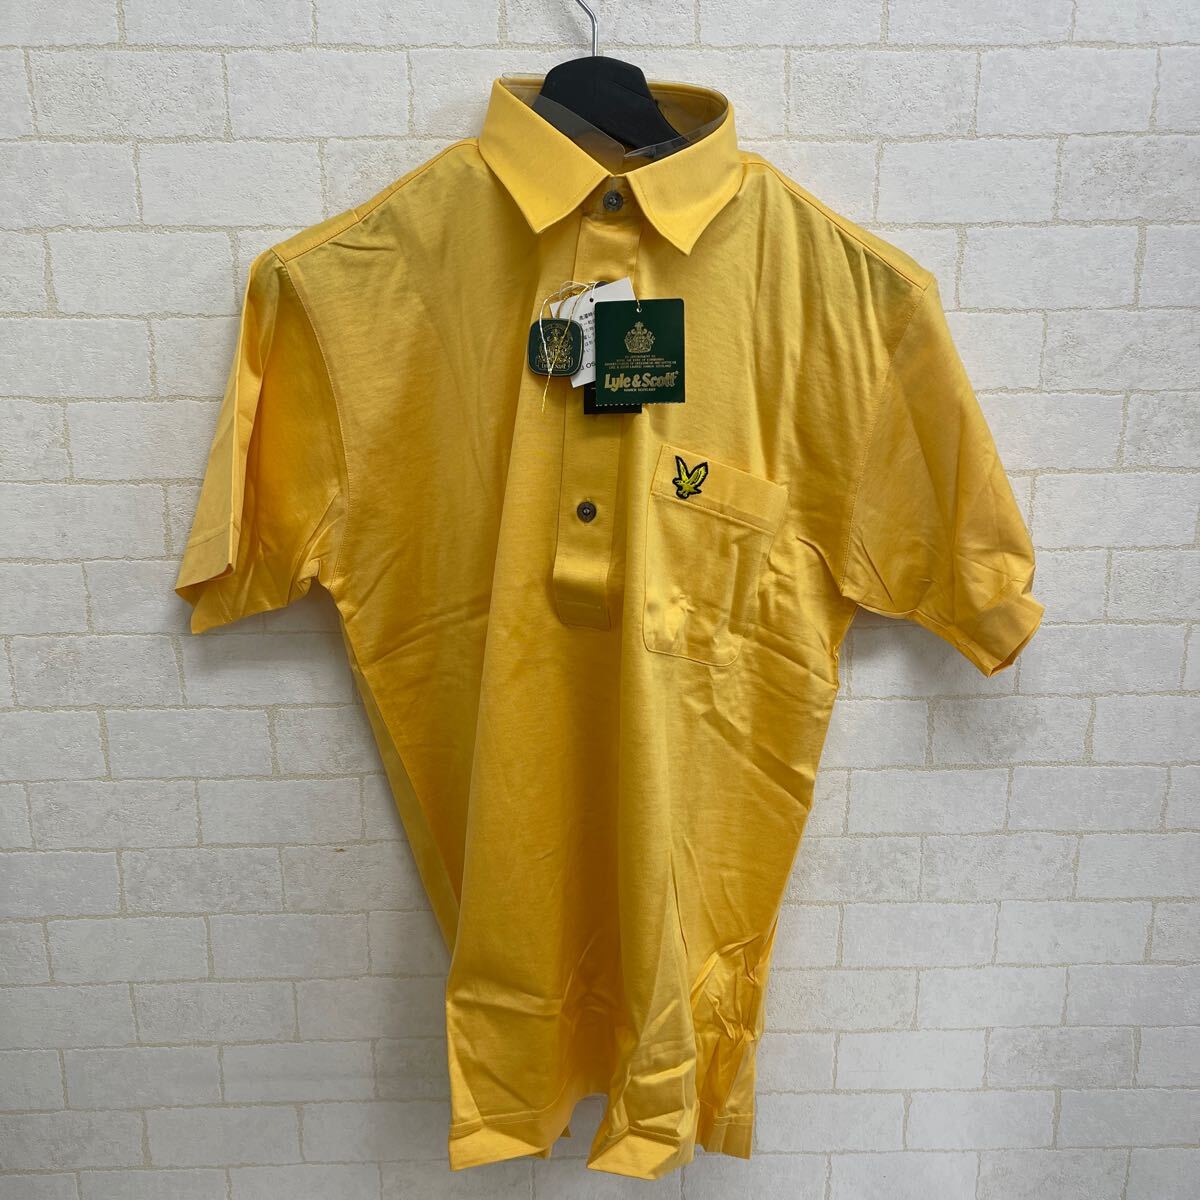 Y408. 22.la il & Scott Lyle&Scott M size polo-shirt with short sleeves yellow dead stock unused storage goods 